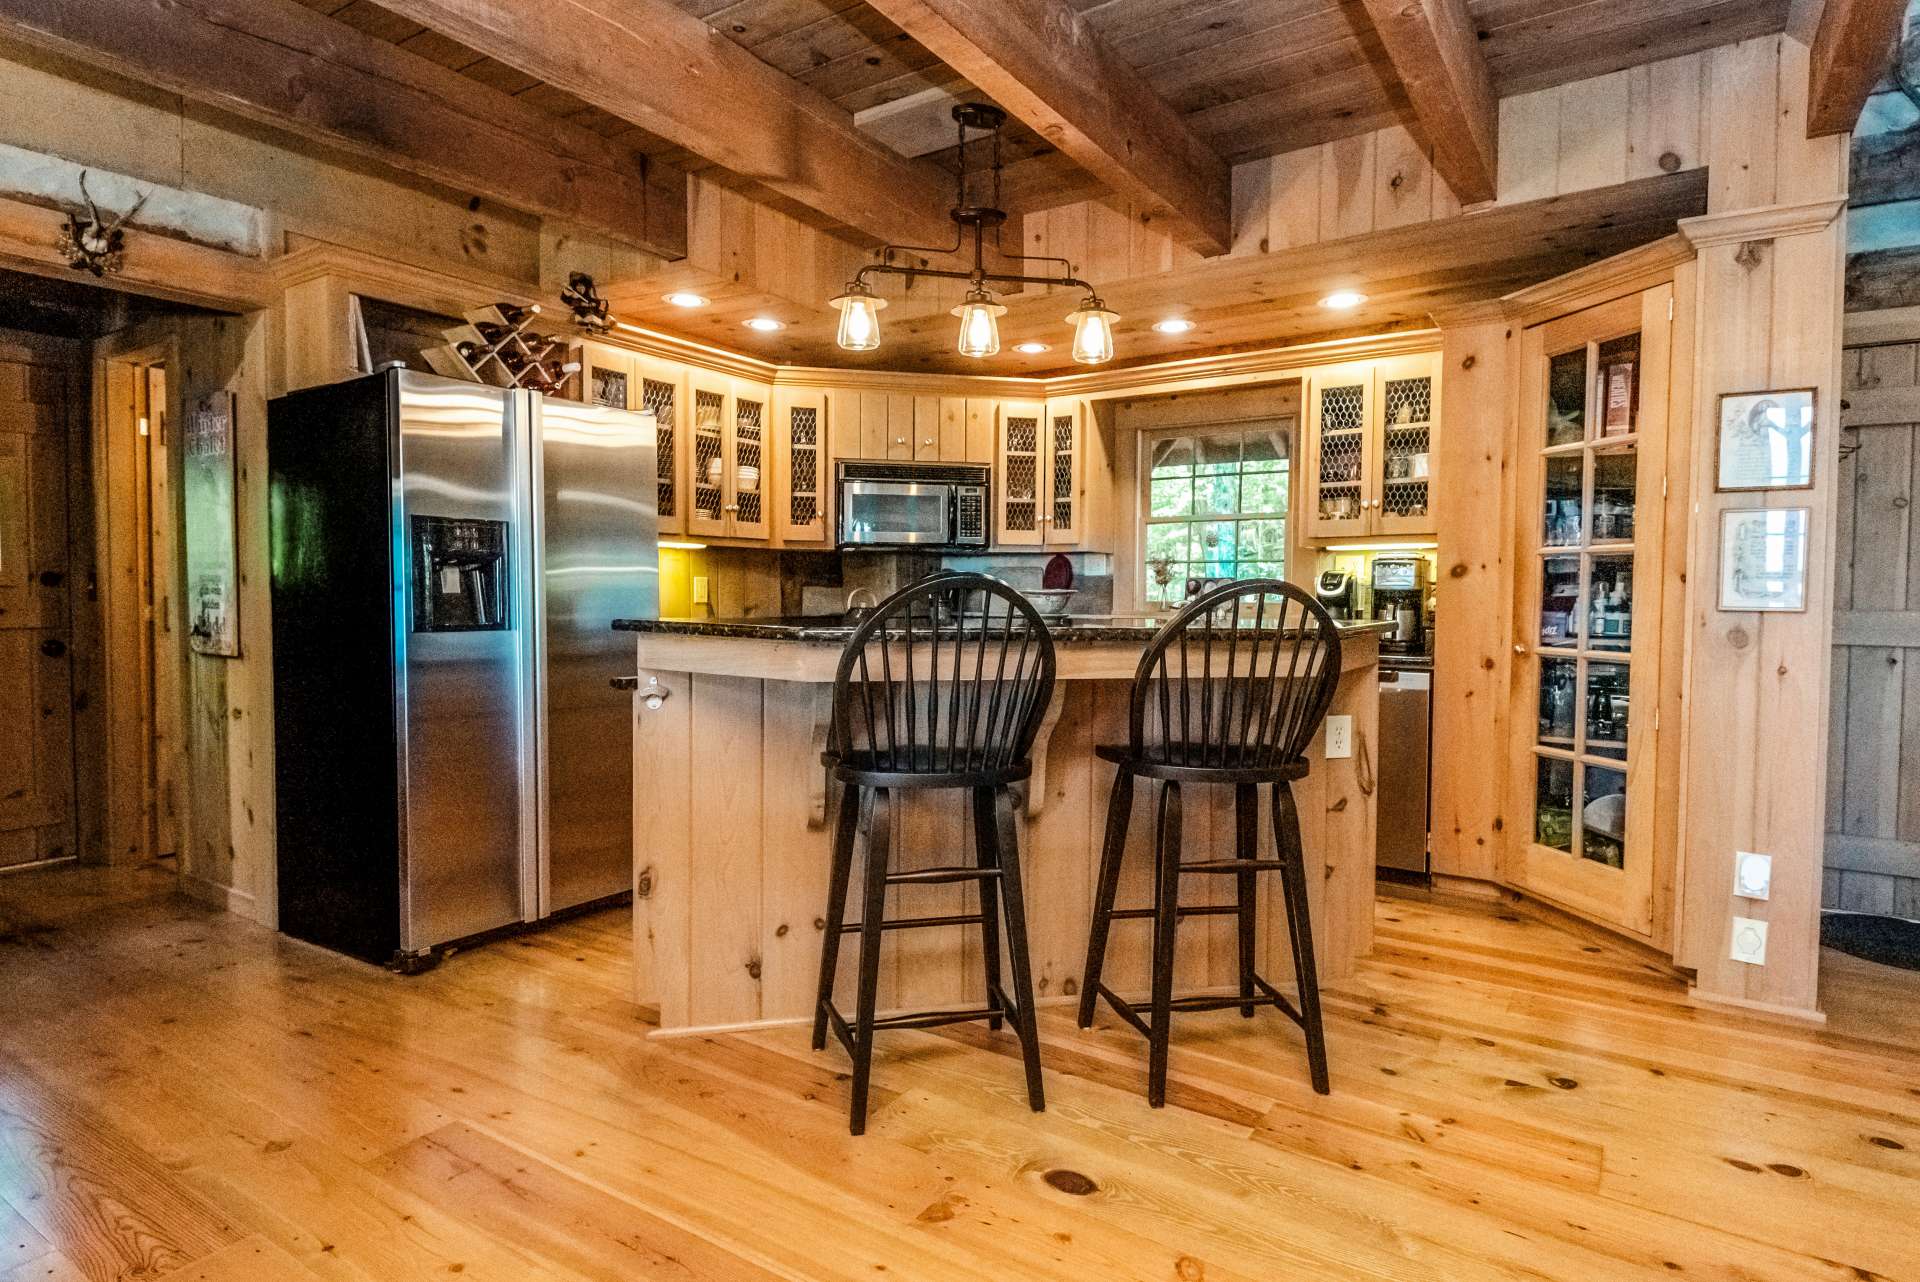 Kitchen offers abundant custom designed cabinets, gas range, and granite counter tops.